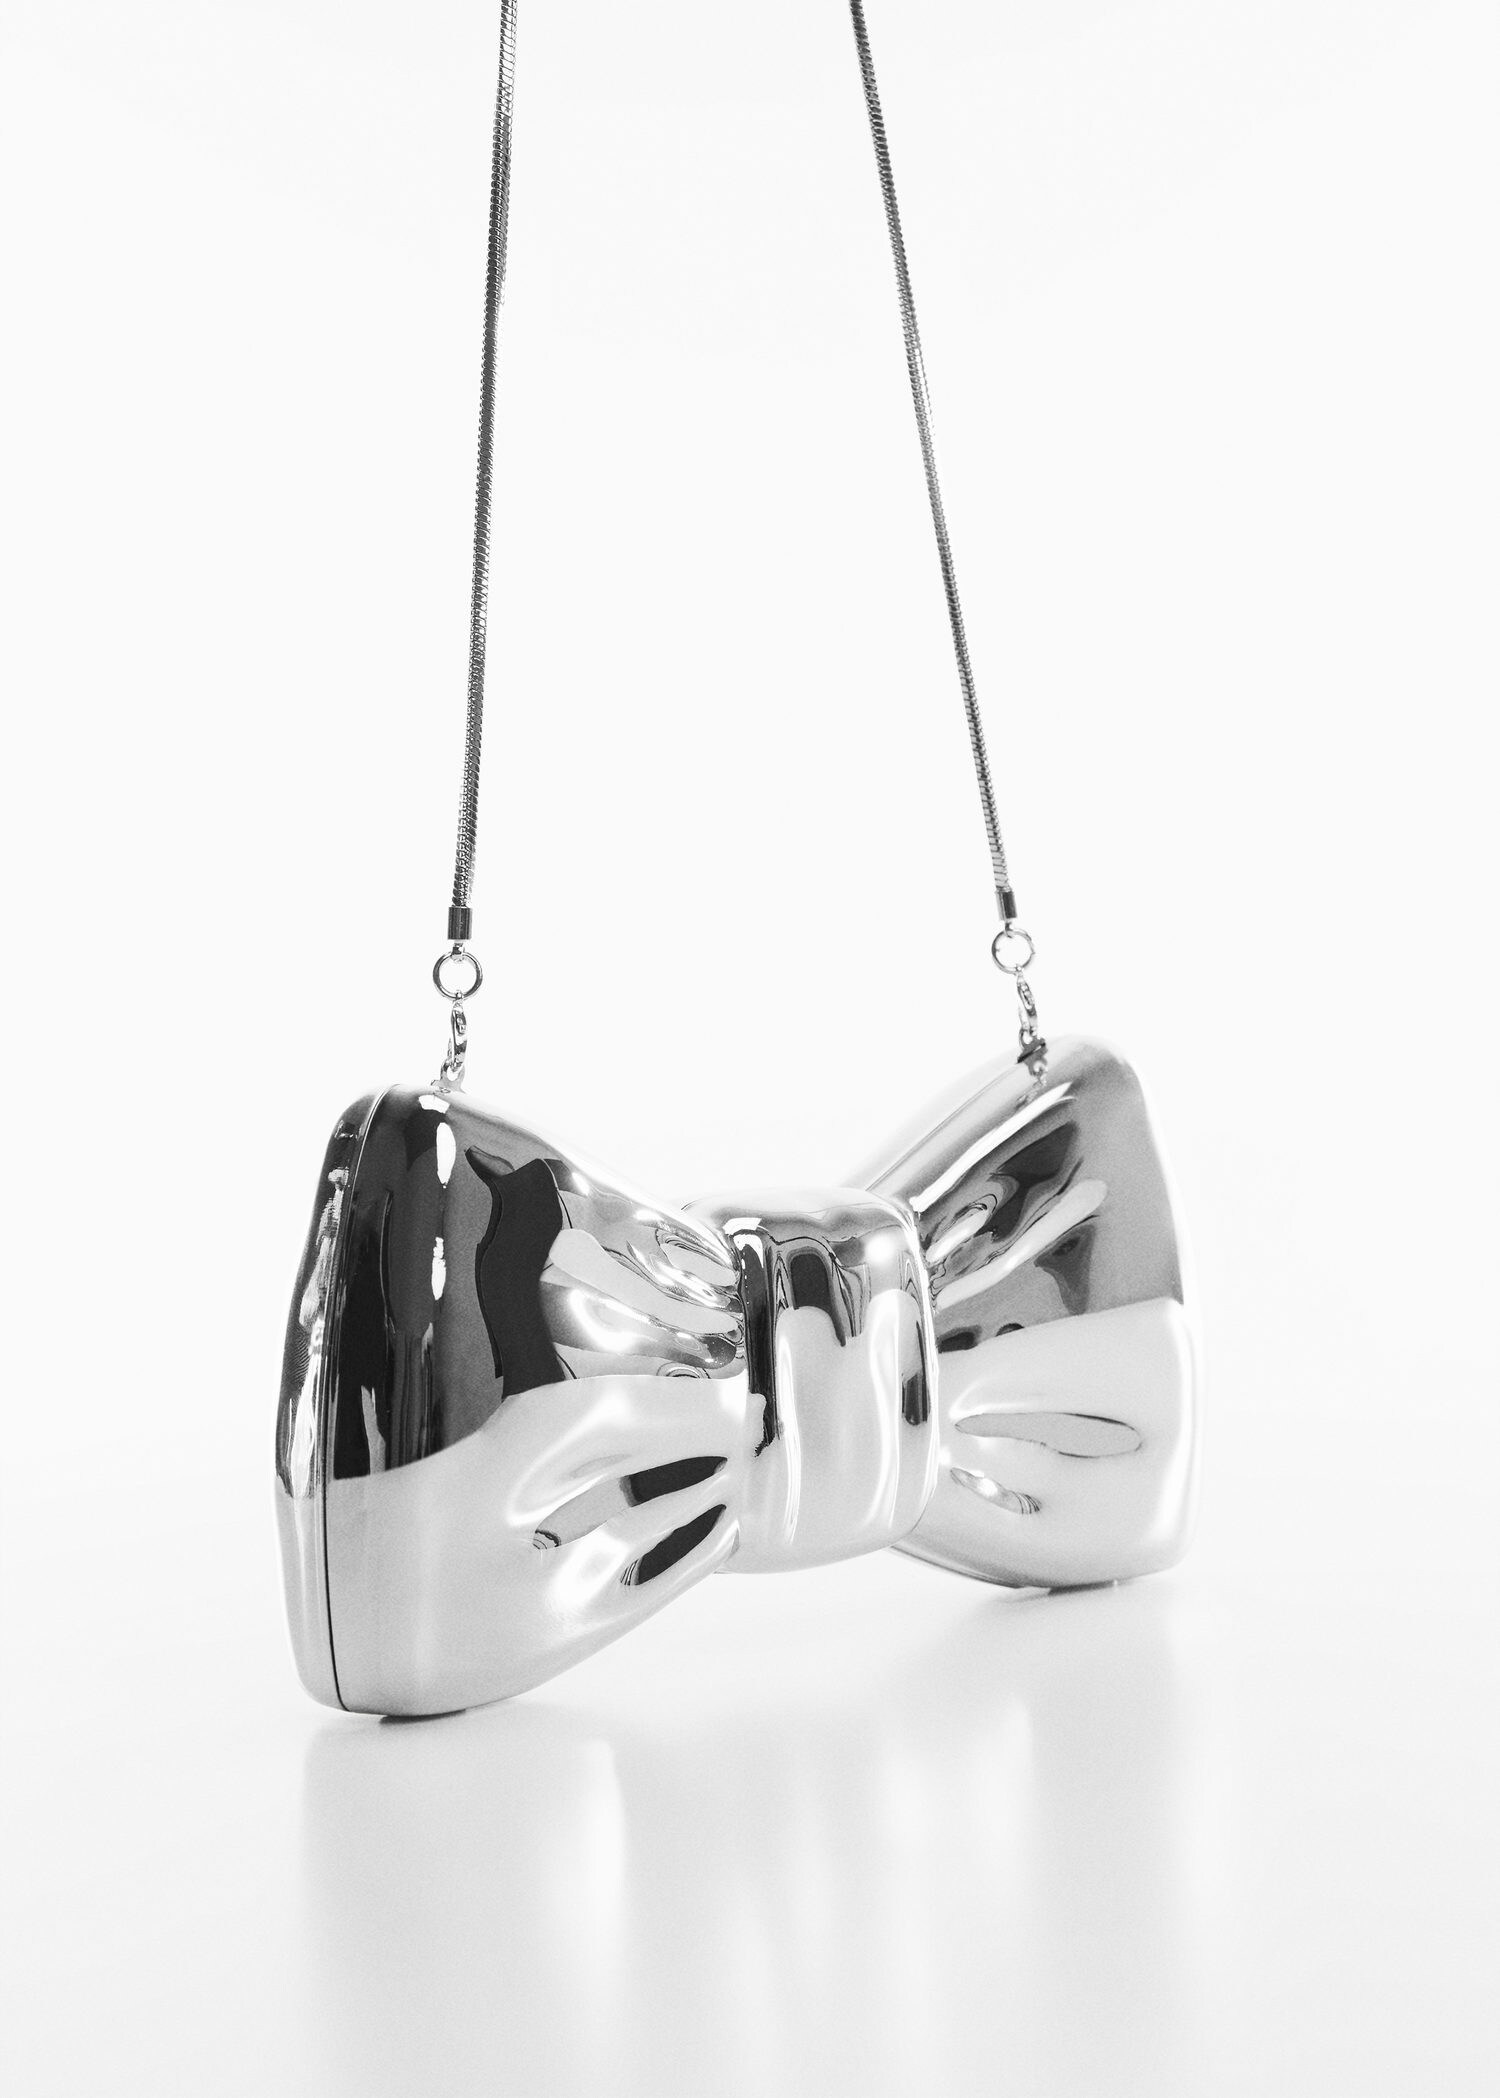 The Bow Handbag – Camilyn Beth